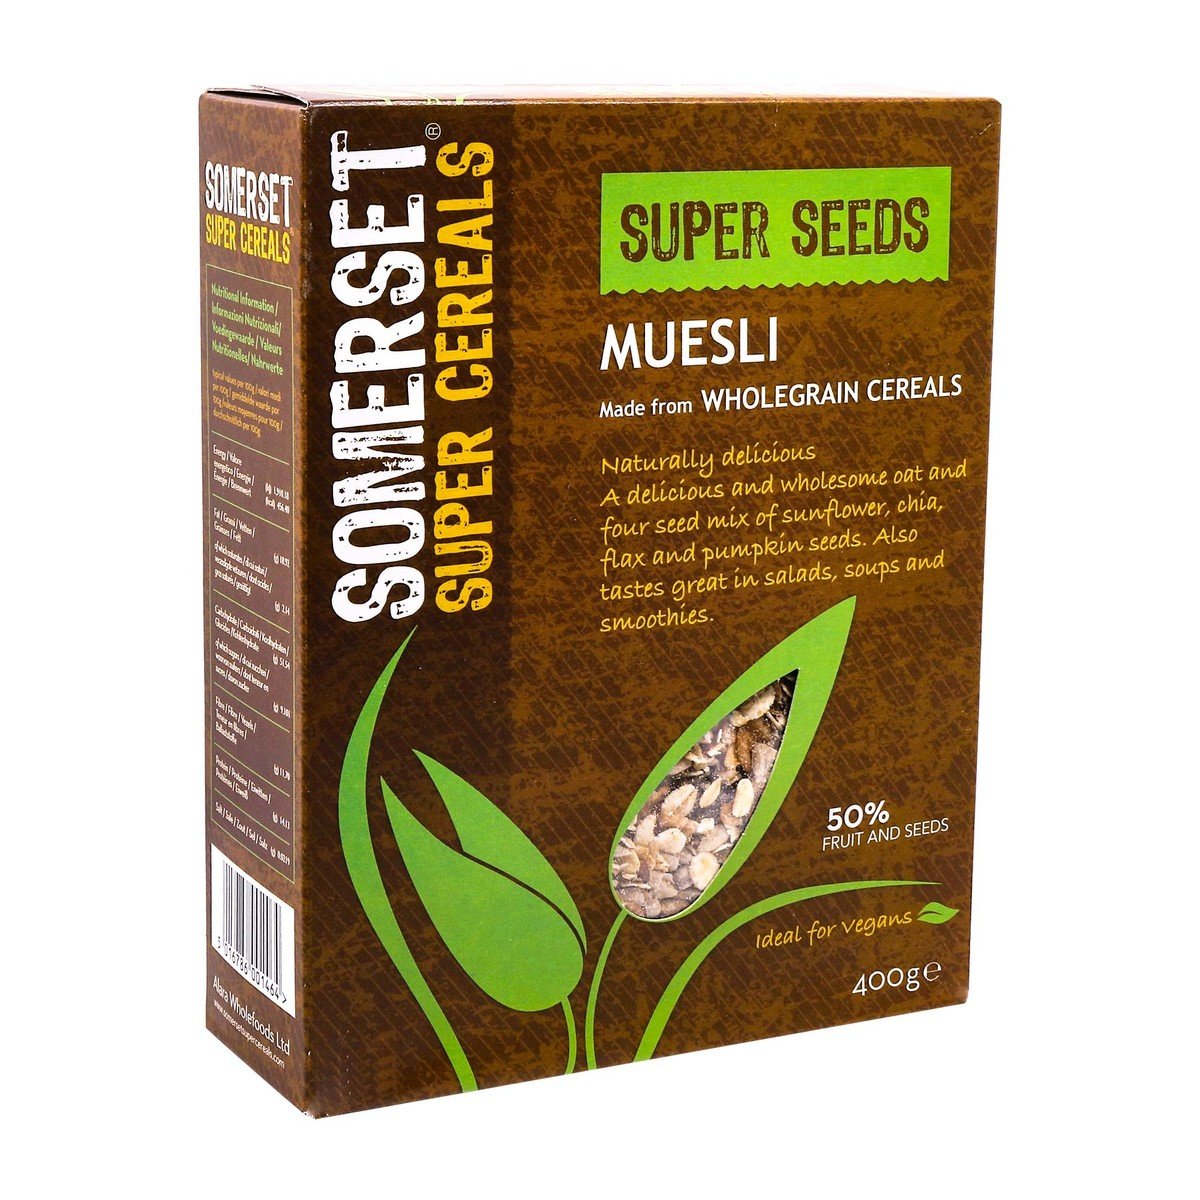 Somerset Super Cereals Super Seeds Muesli 400 g